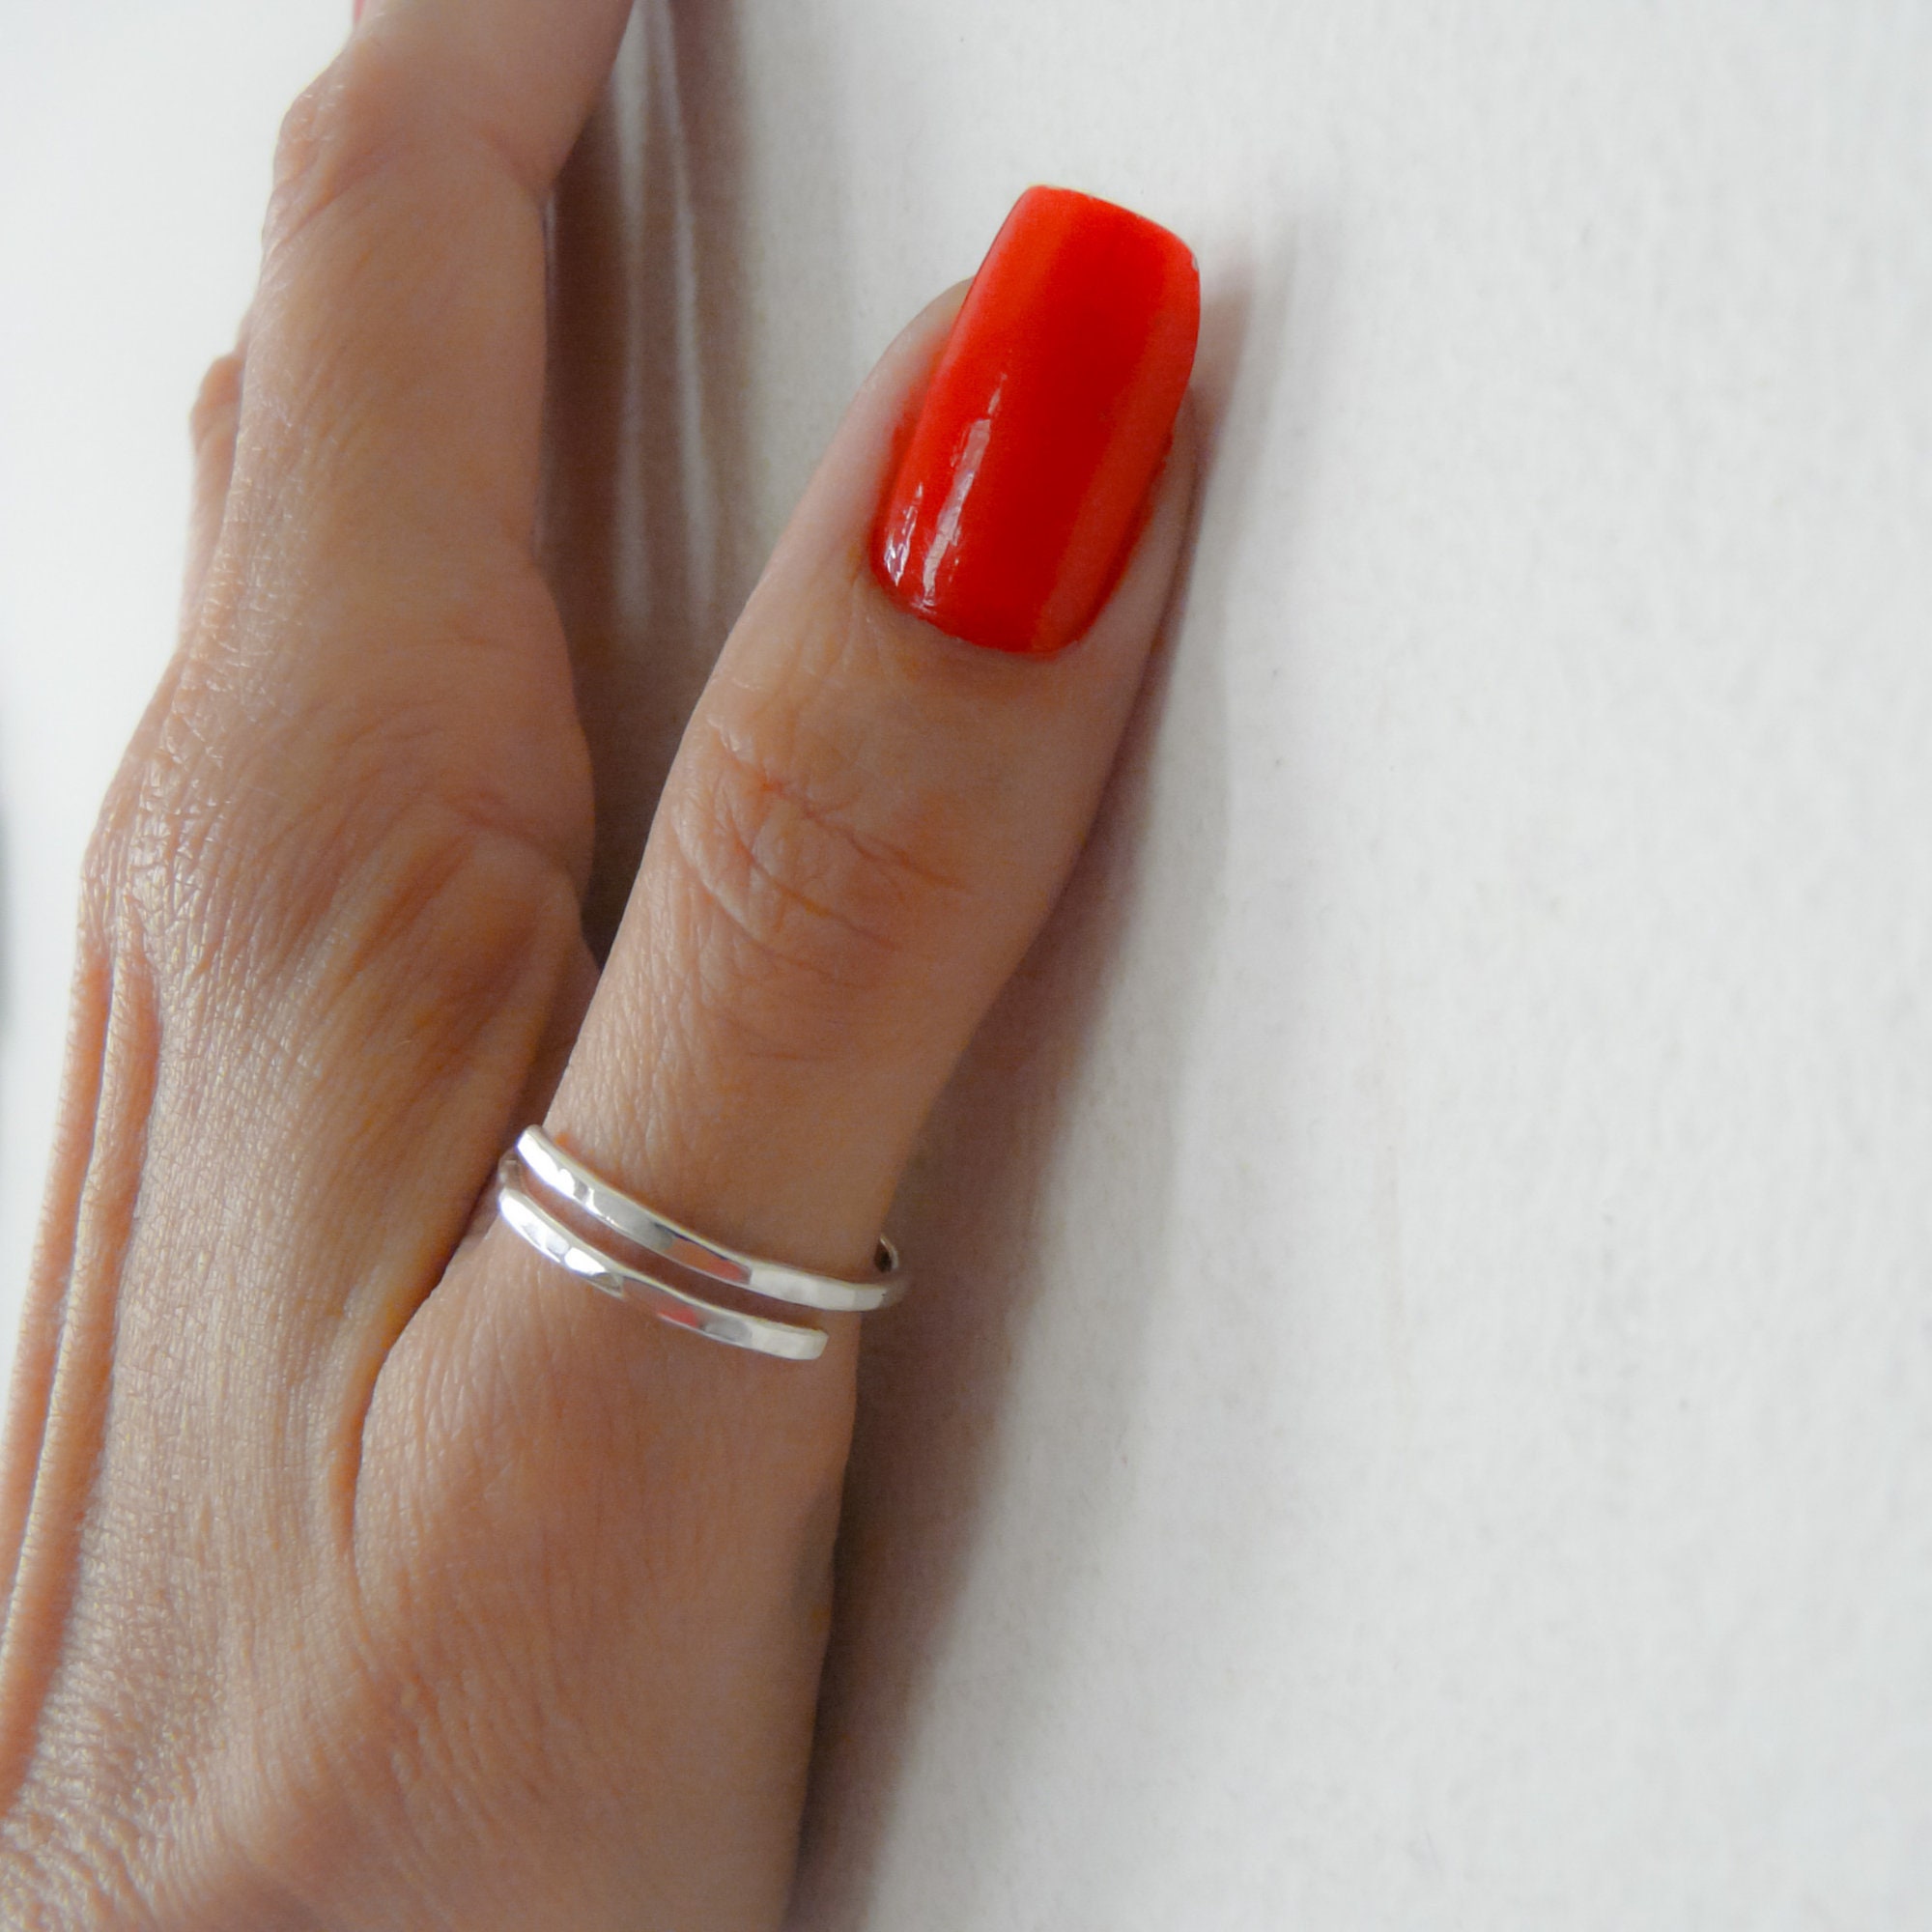 Thumb Ring, Gold Thumb Ring, 14K Gold Filled thumb Ring, 3mm, Gold Thumb  Rings For Women , Real 14k, Comfort Fit